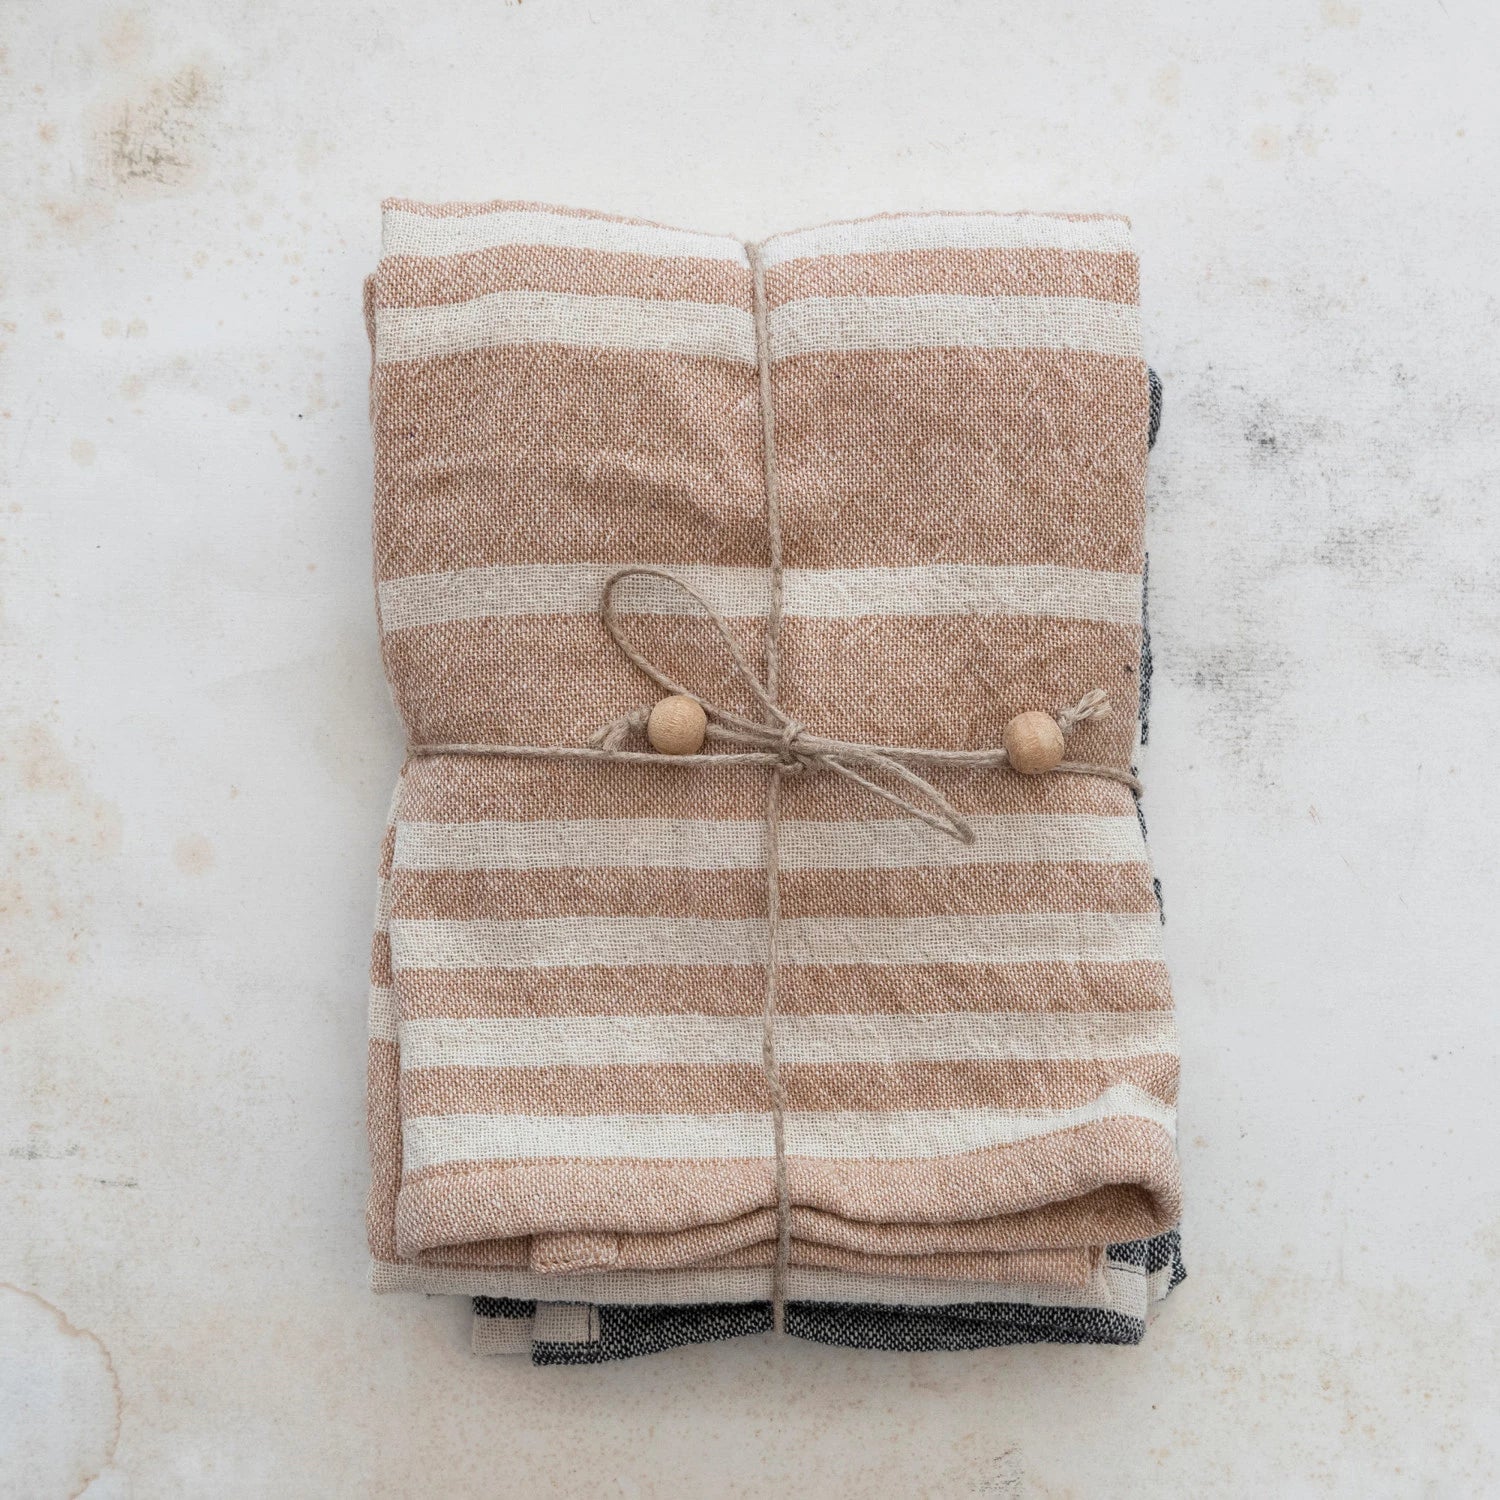 Cotton Double Cloth Striped Tea Towels w/ Jute & Wood Bead Tie- Set of 2